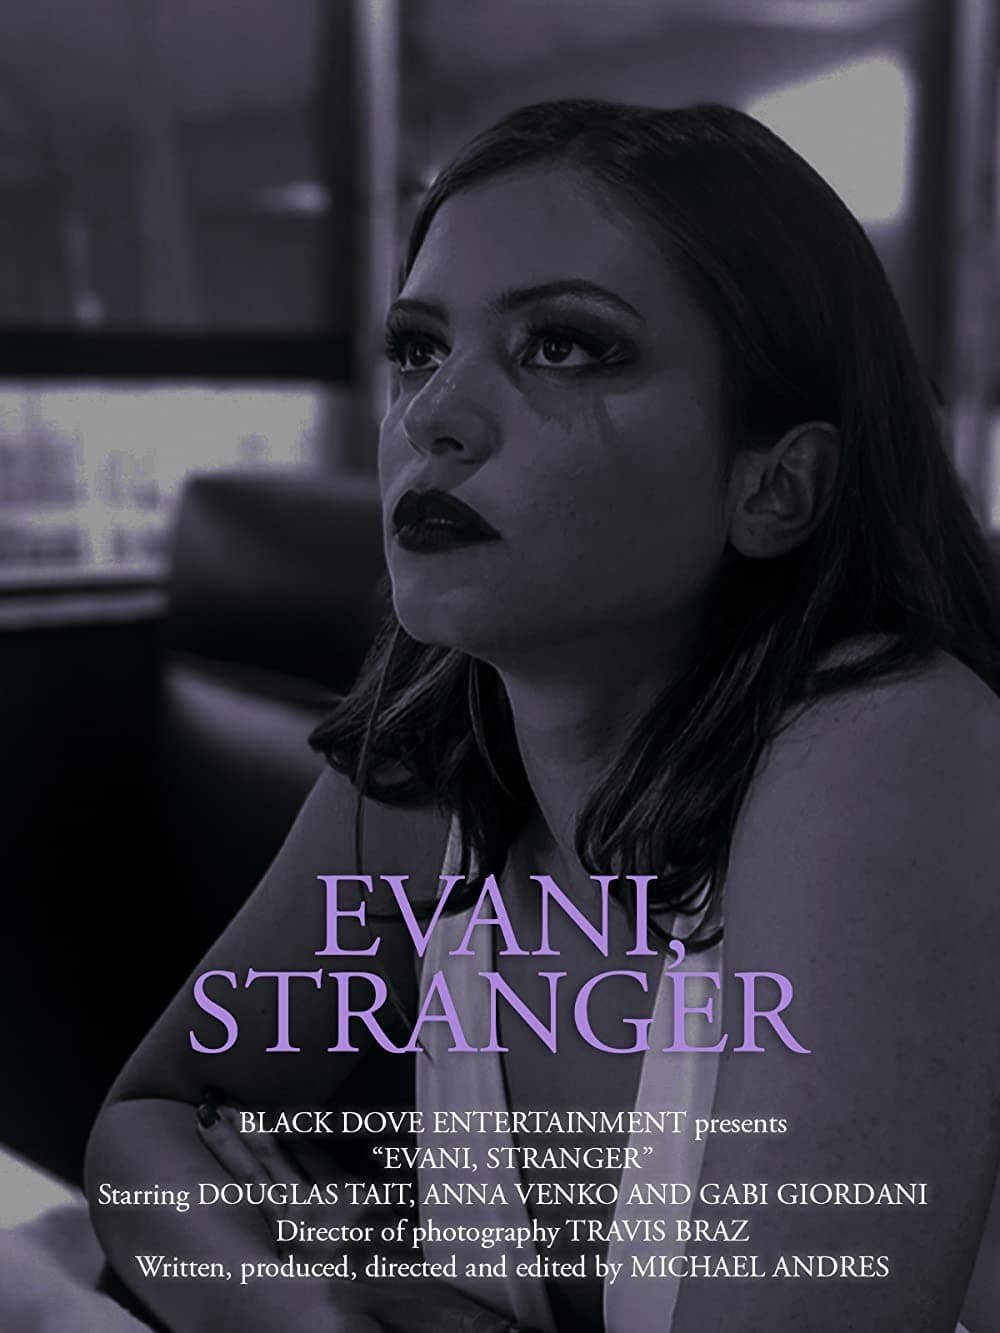 Evani, Stranger